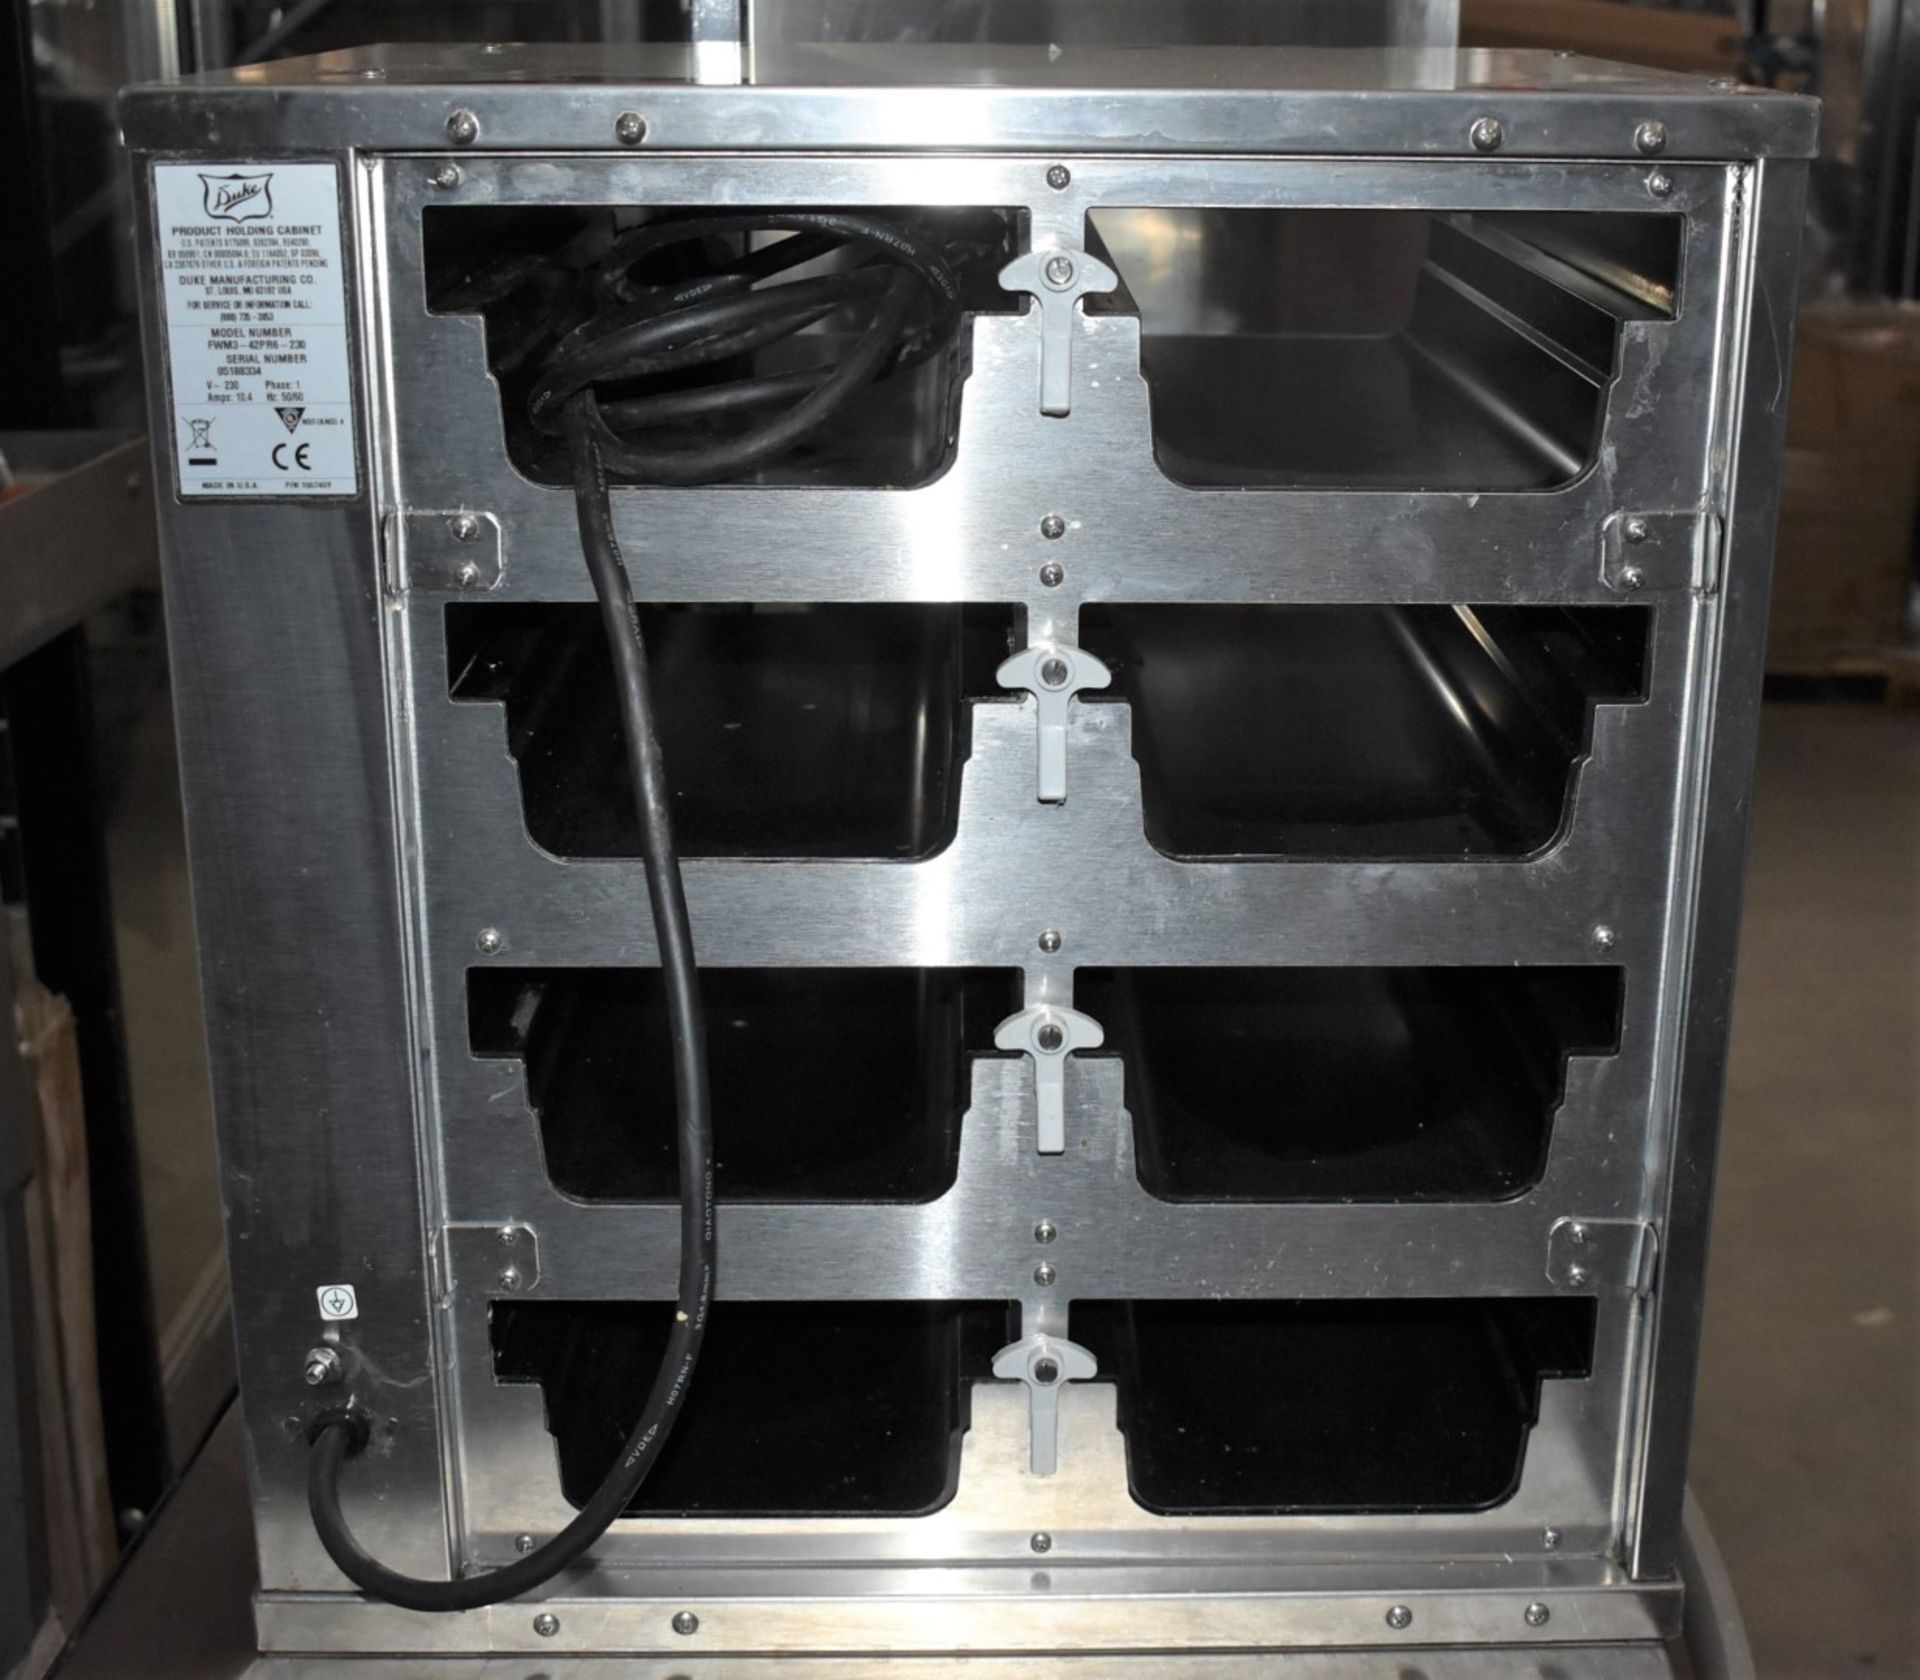 1 x Duke FWM Food Warming Holding Cabinet With HeatSinnk Technology - Model FWM3-42PR6-230 - Image 2 of 11